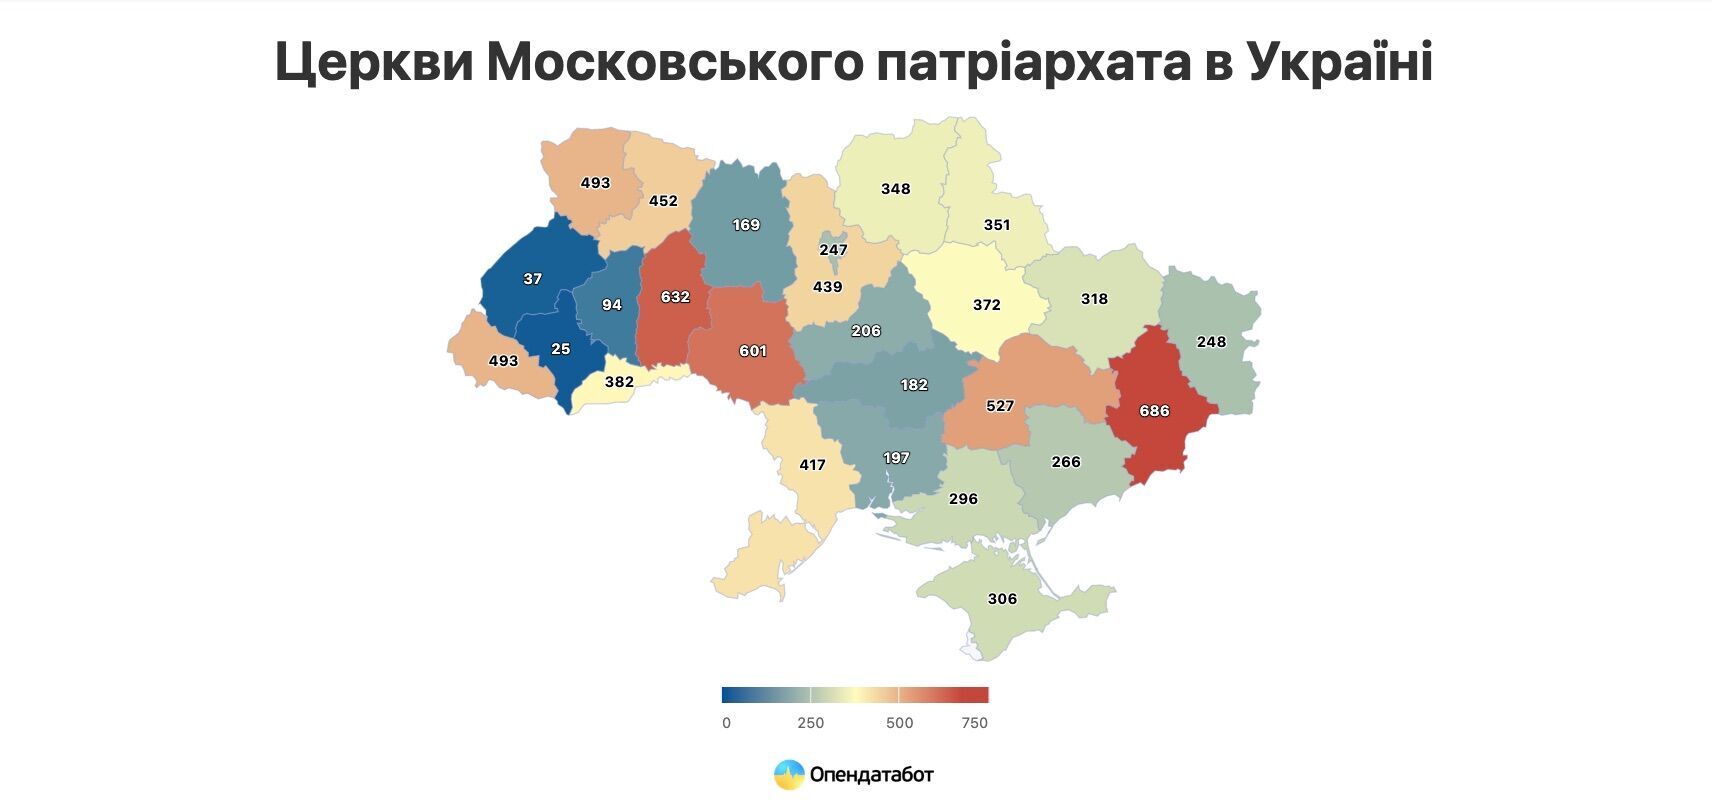 Количество церквей УПЦ МП по регионам Украины